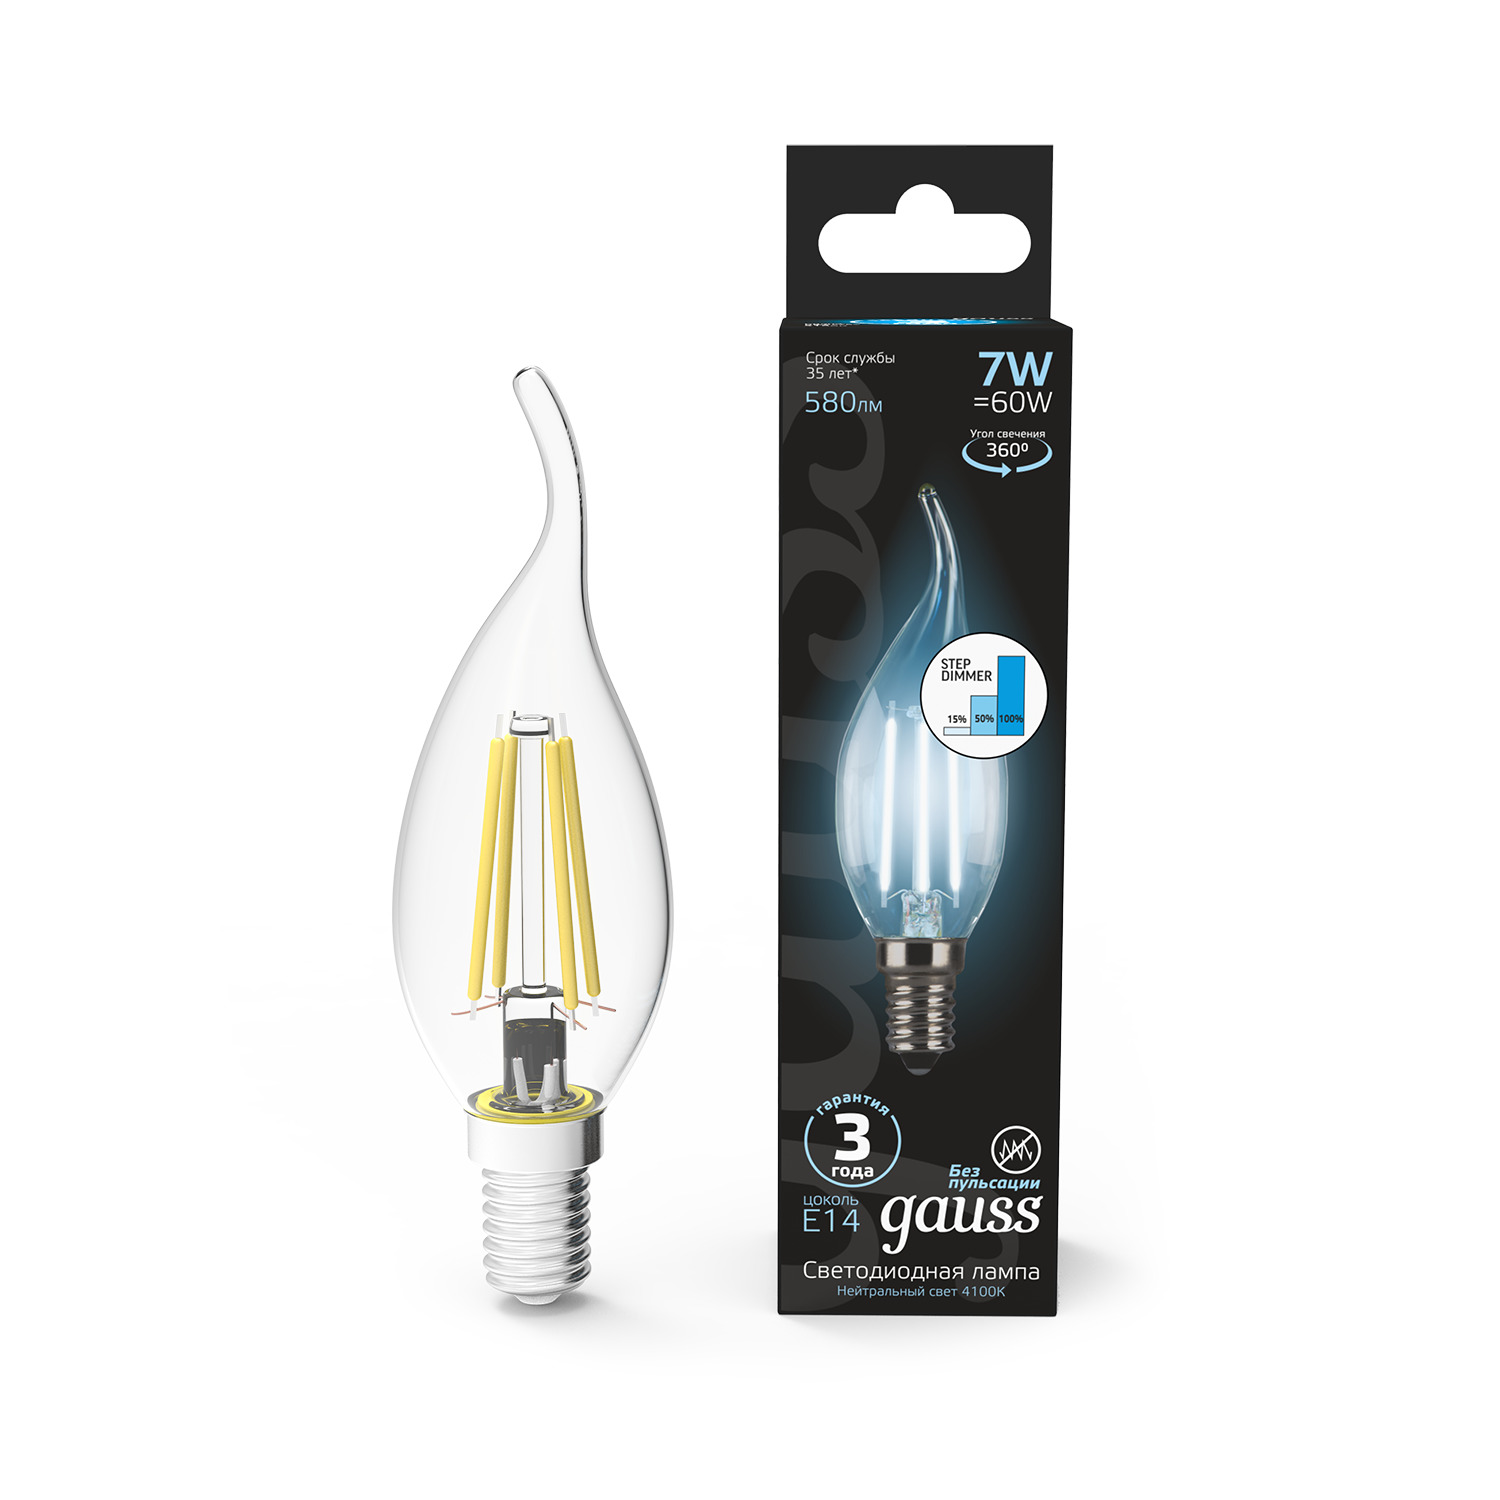 Лампа Gauss LED Filament Свеча на ветру E14 7W 580lm 4100K step dimmable 1/10/50 лампа gauss led filament свеча e14 7w 580lm 4100к step dimmable 1 10 50